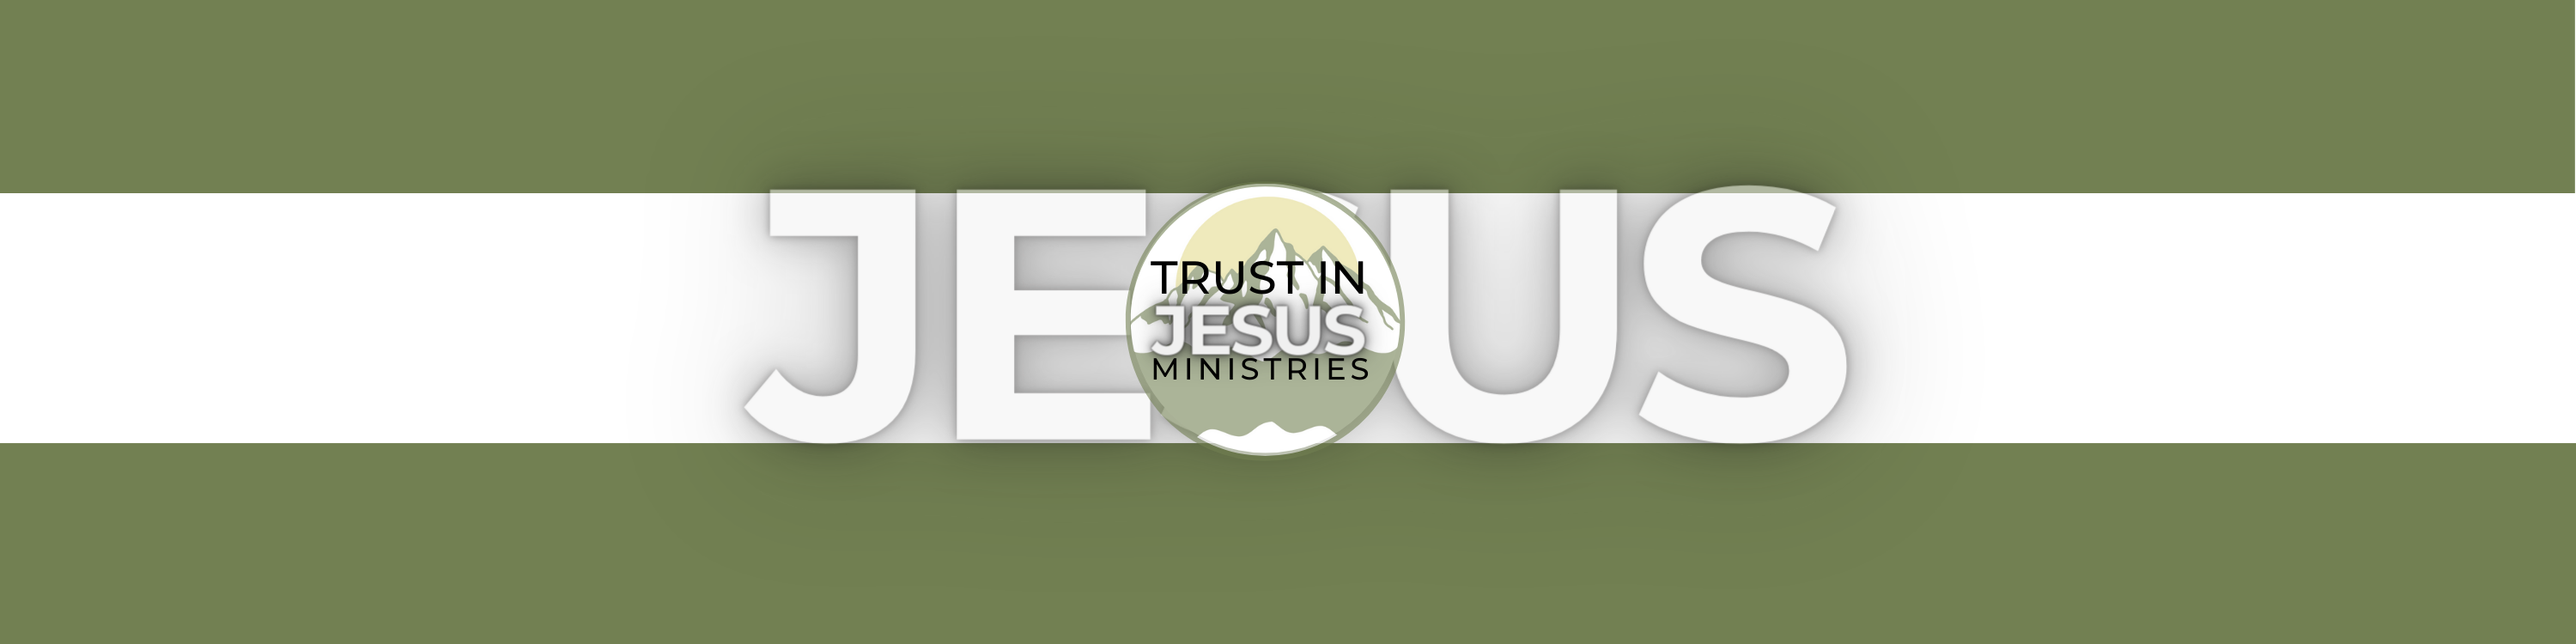 Trust in Jesus Ministries logo